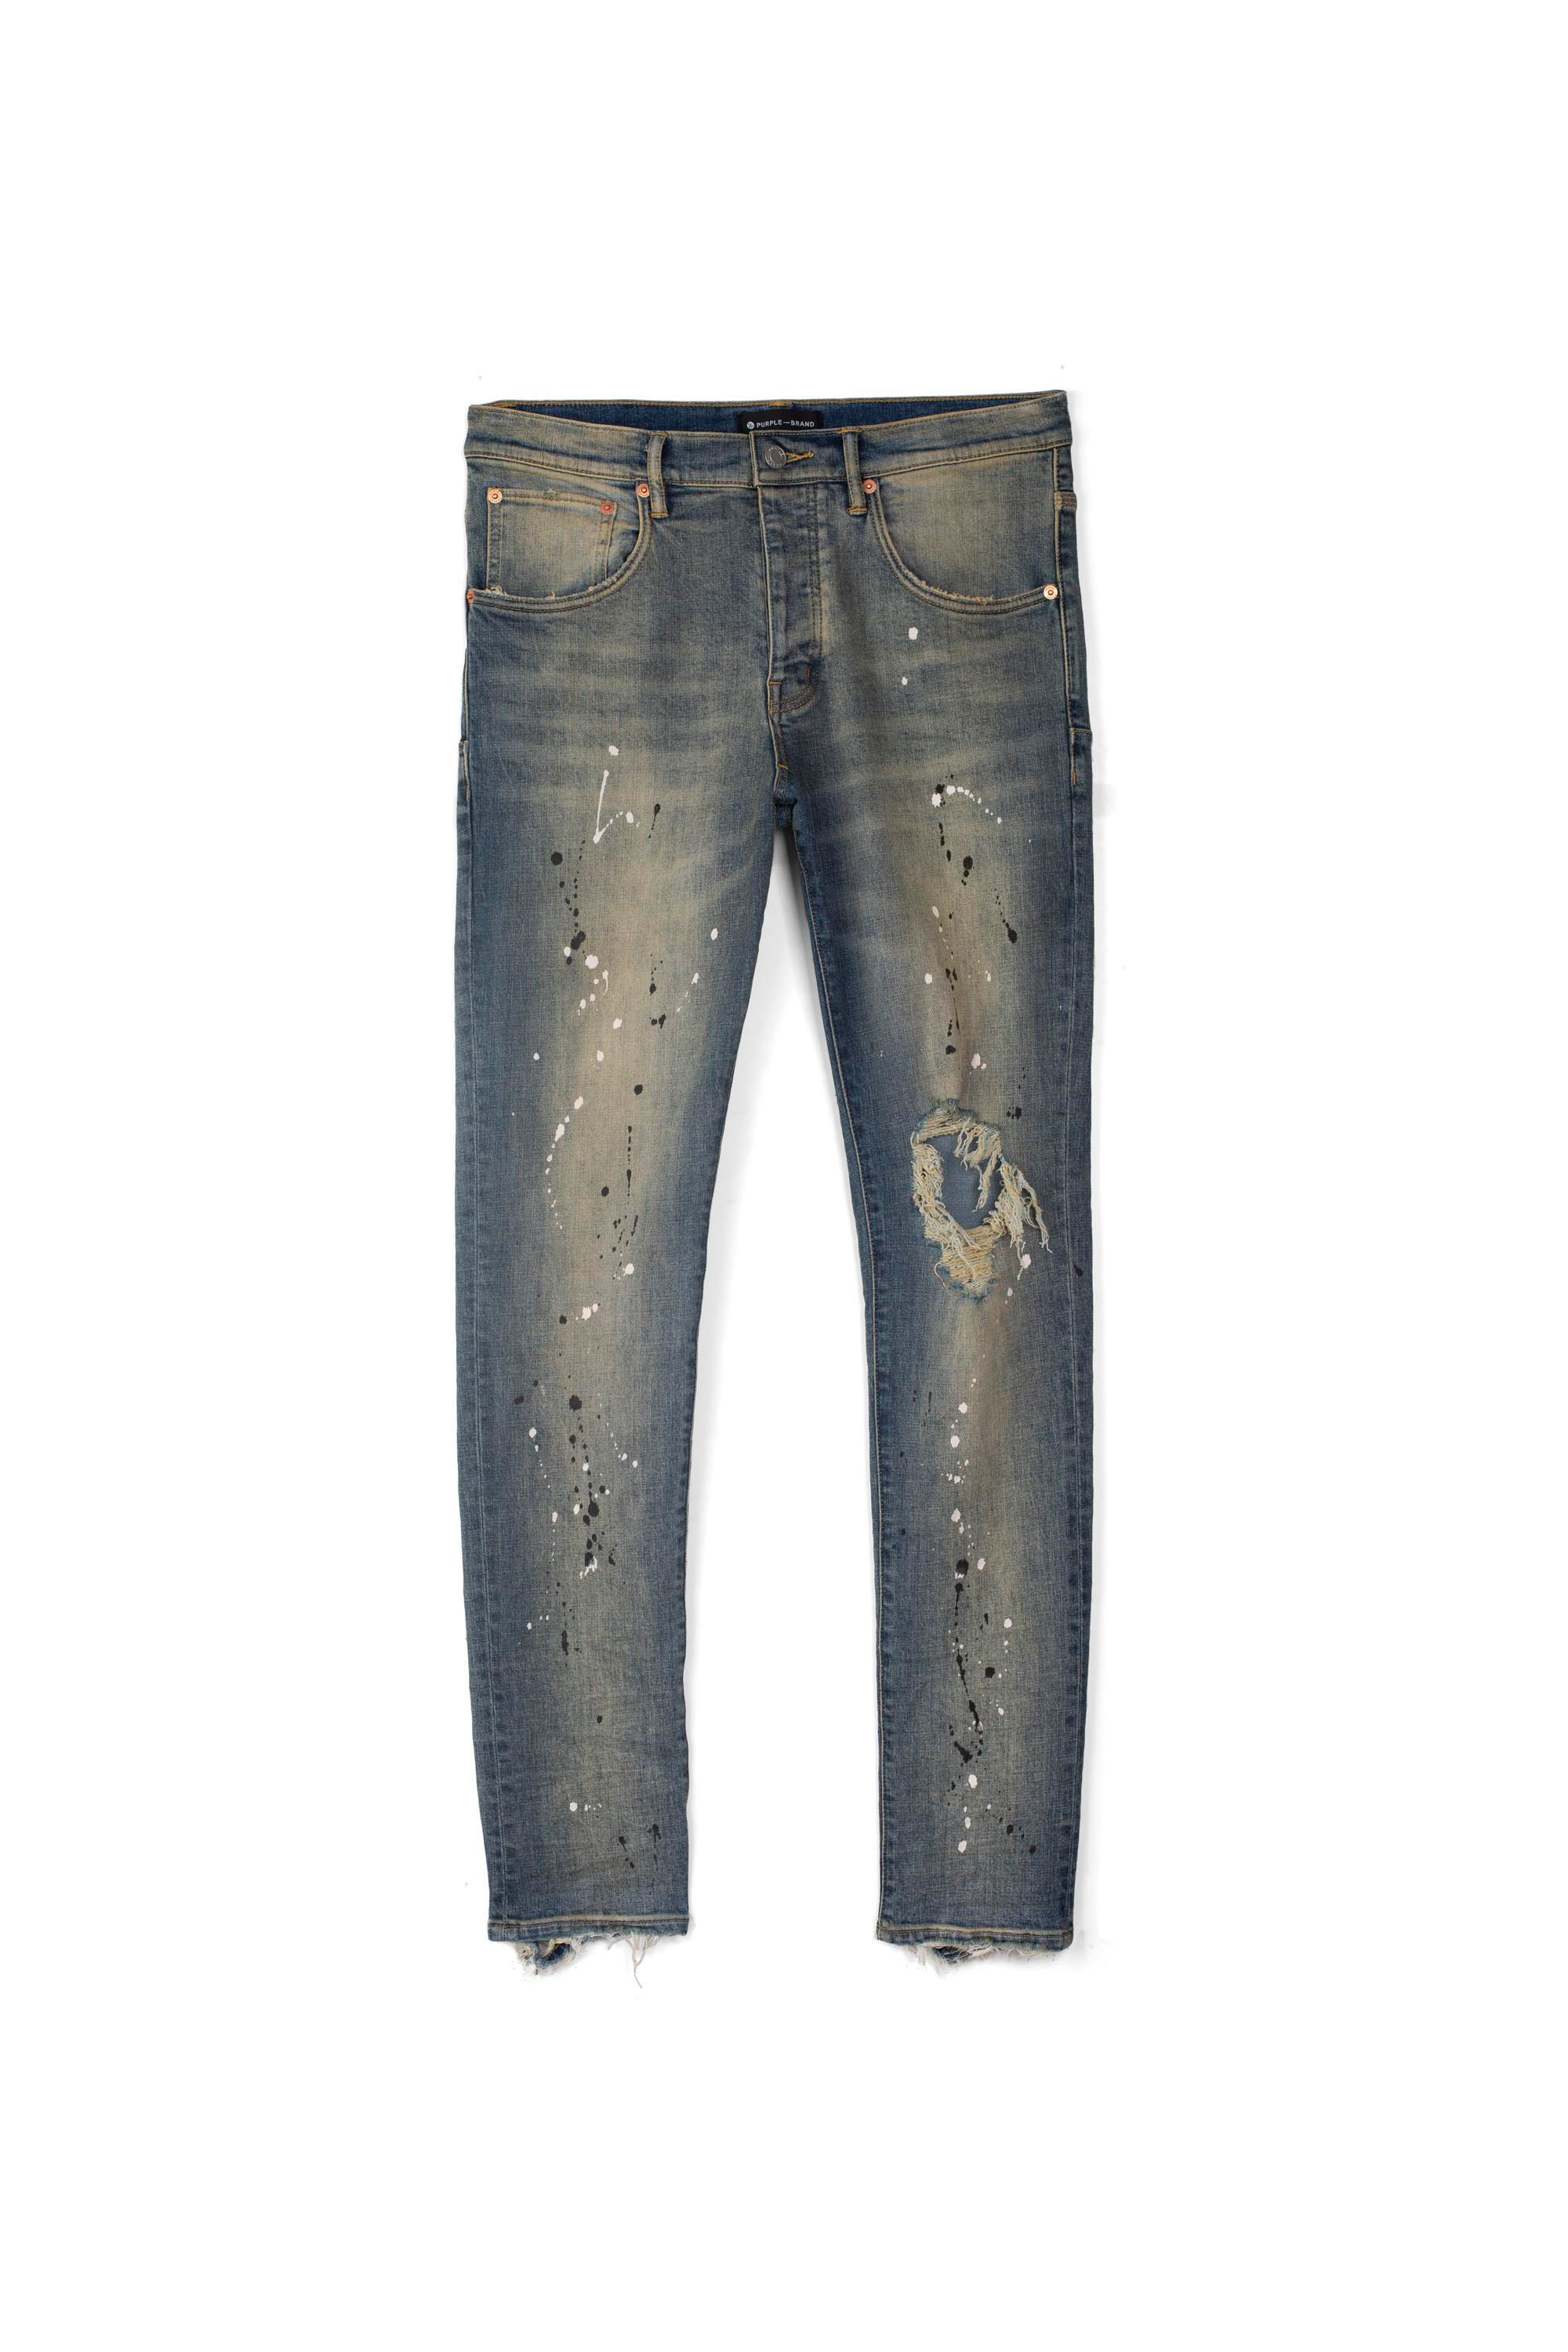 Purple-brand Reverse Front Hem Zip Jeans Mens Style : P002-grfz222